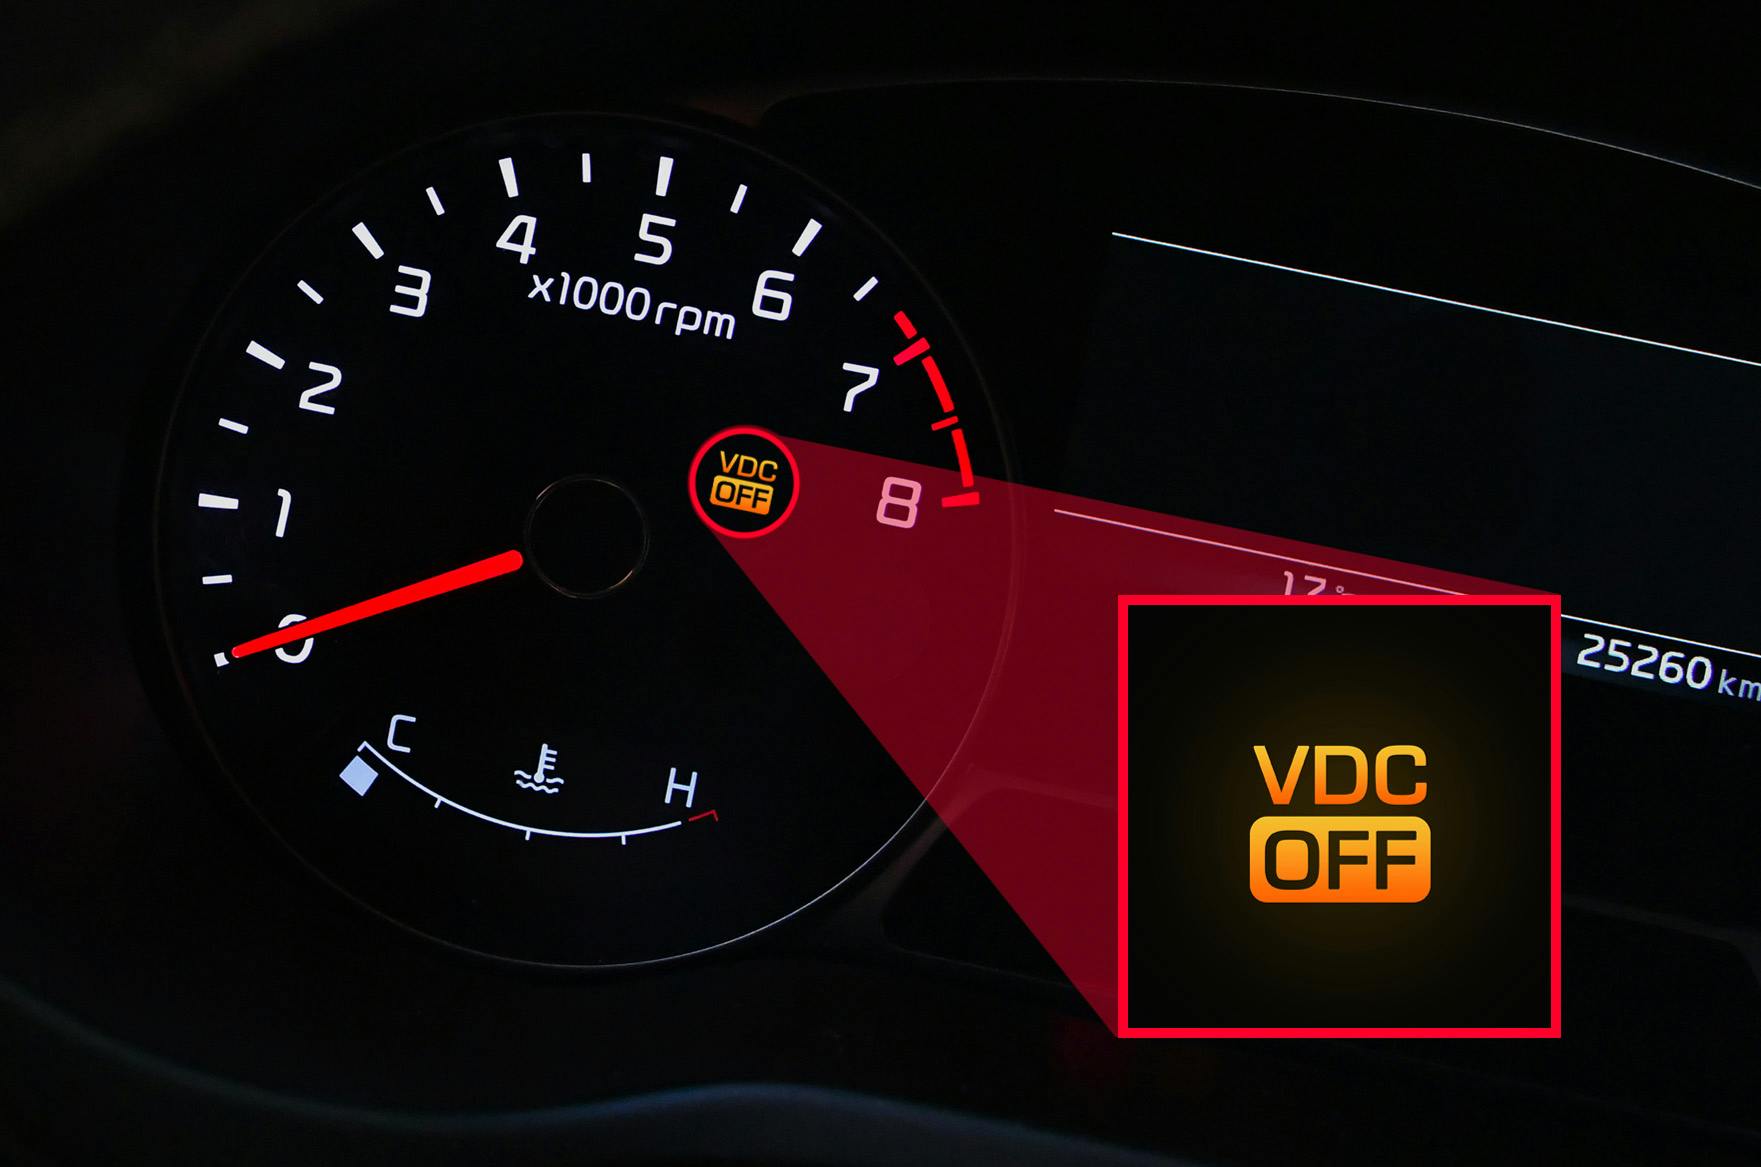 VDC OFF warning light on the dashboard